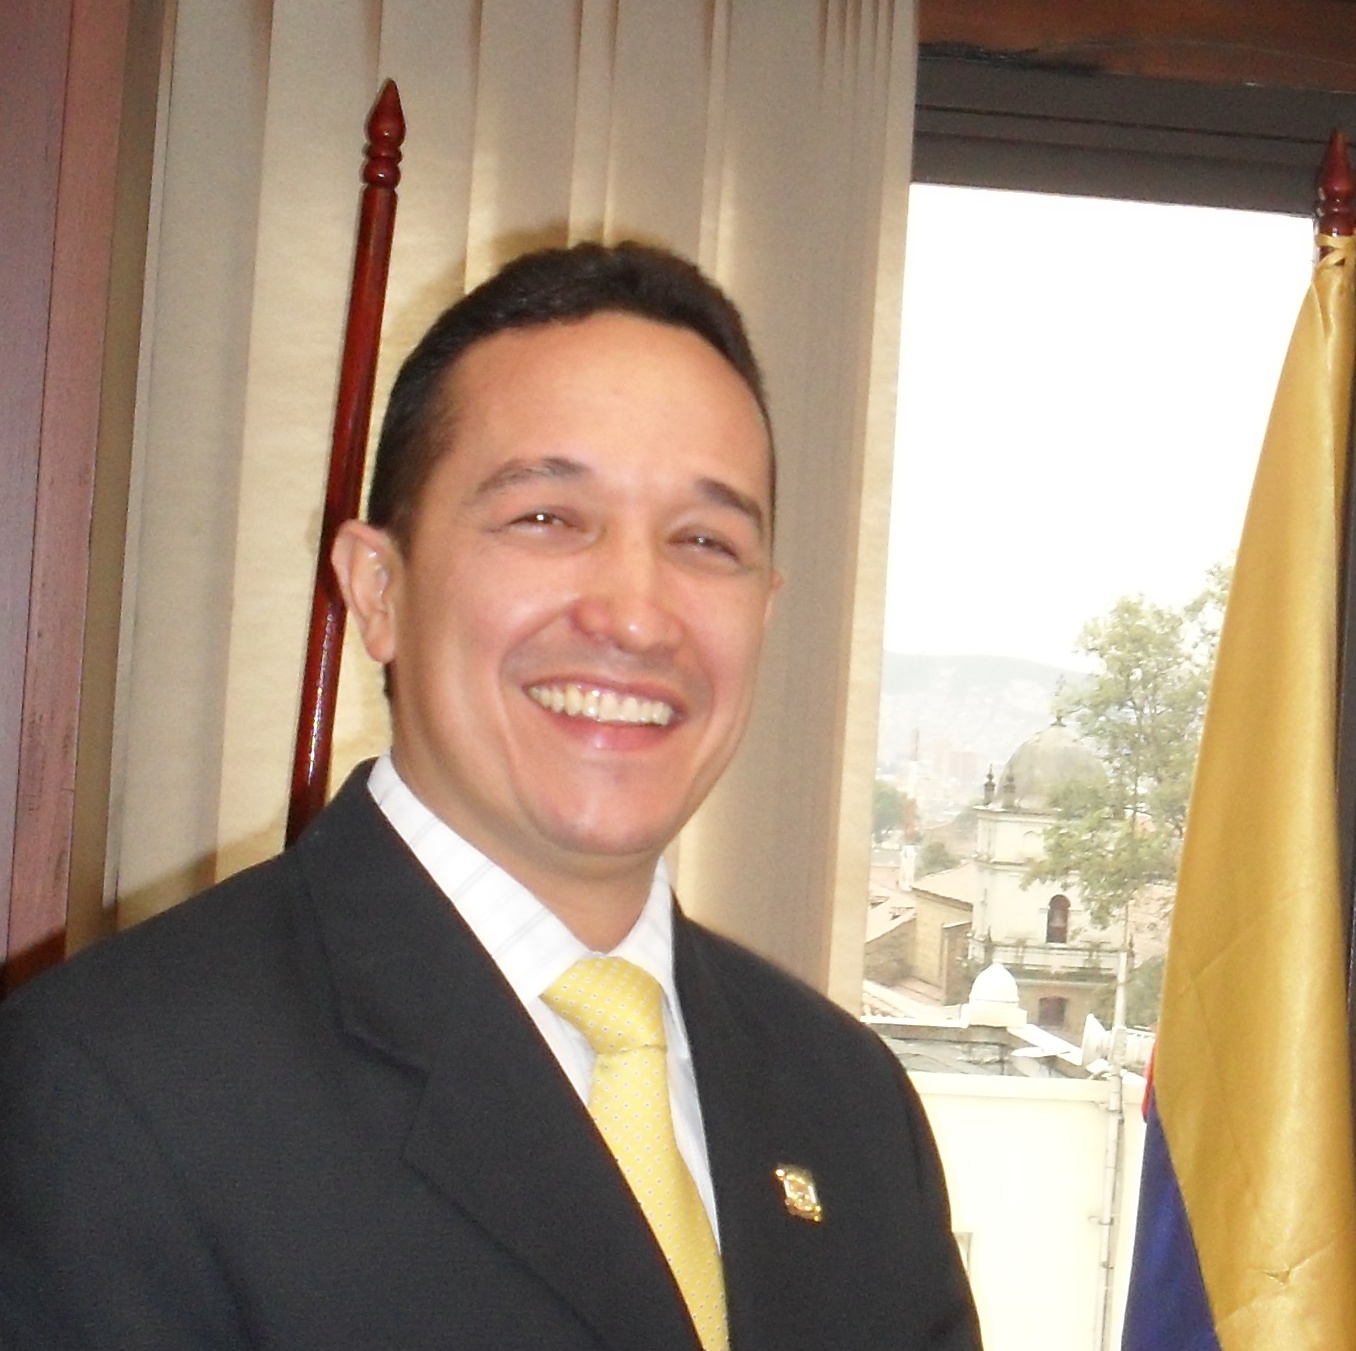 Luis Fernando